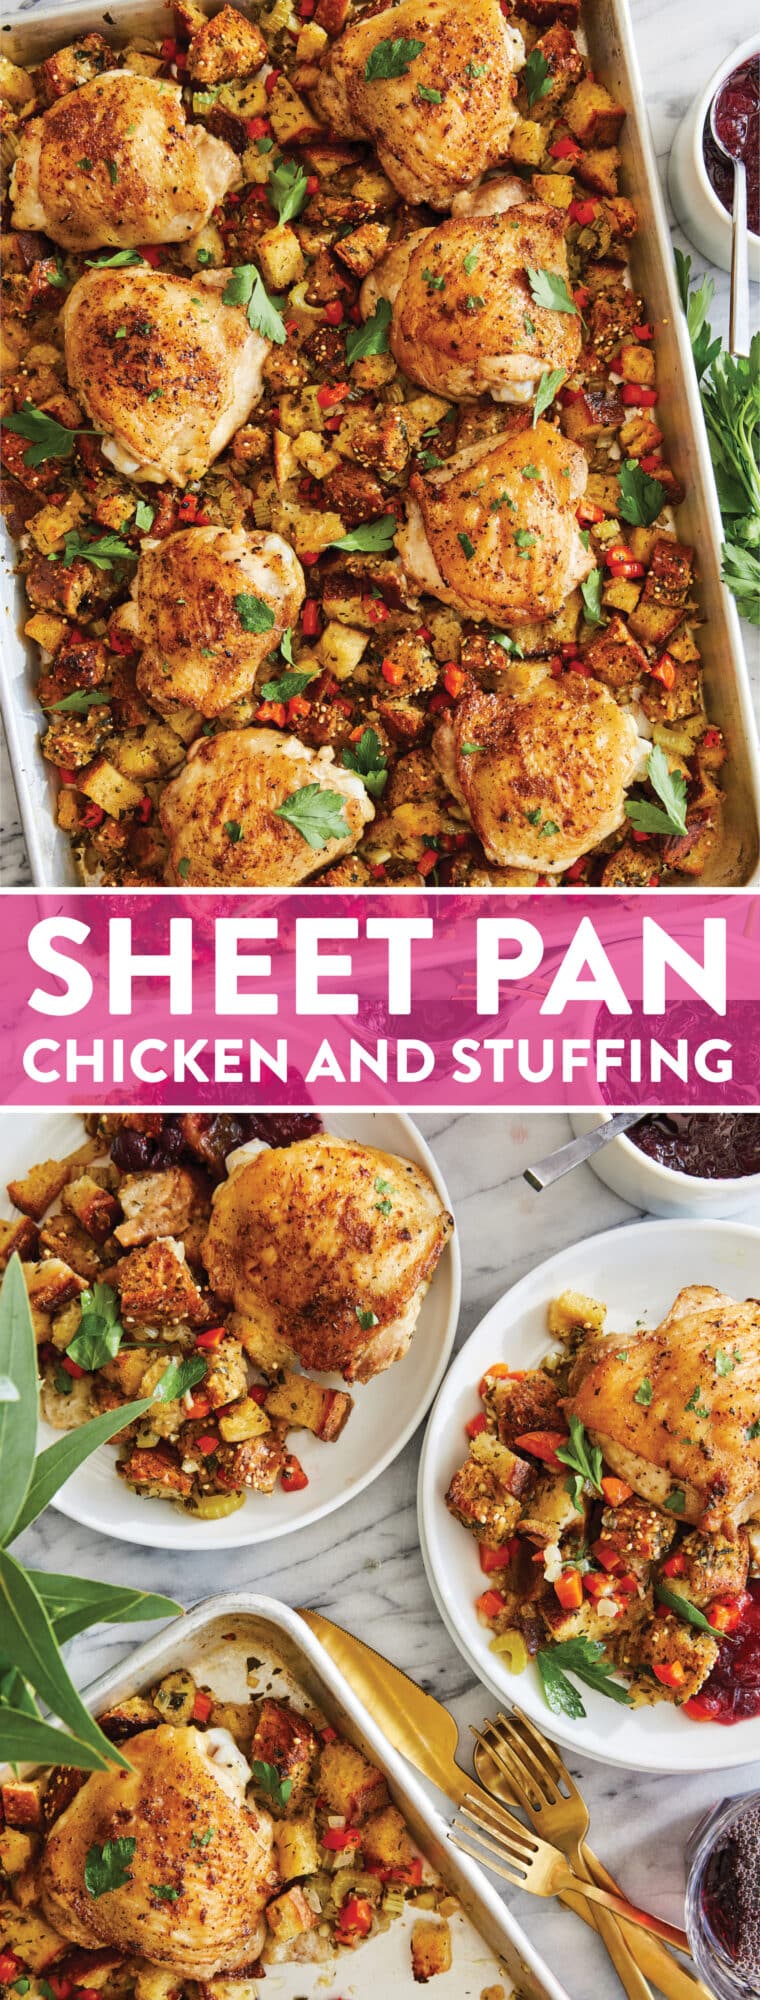 Sheet Pan Chicken and Stuffing - The best no-fuss SHEET PAN DINNER! Crisp, juicy chicken thighs baked alongside my favorite stuffing recipe.